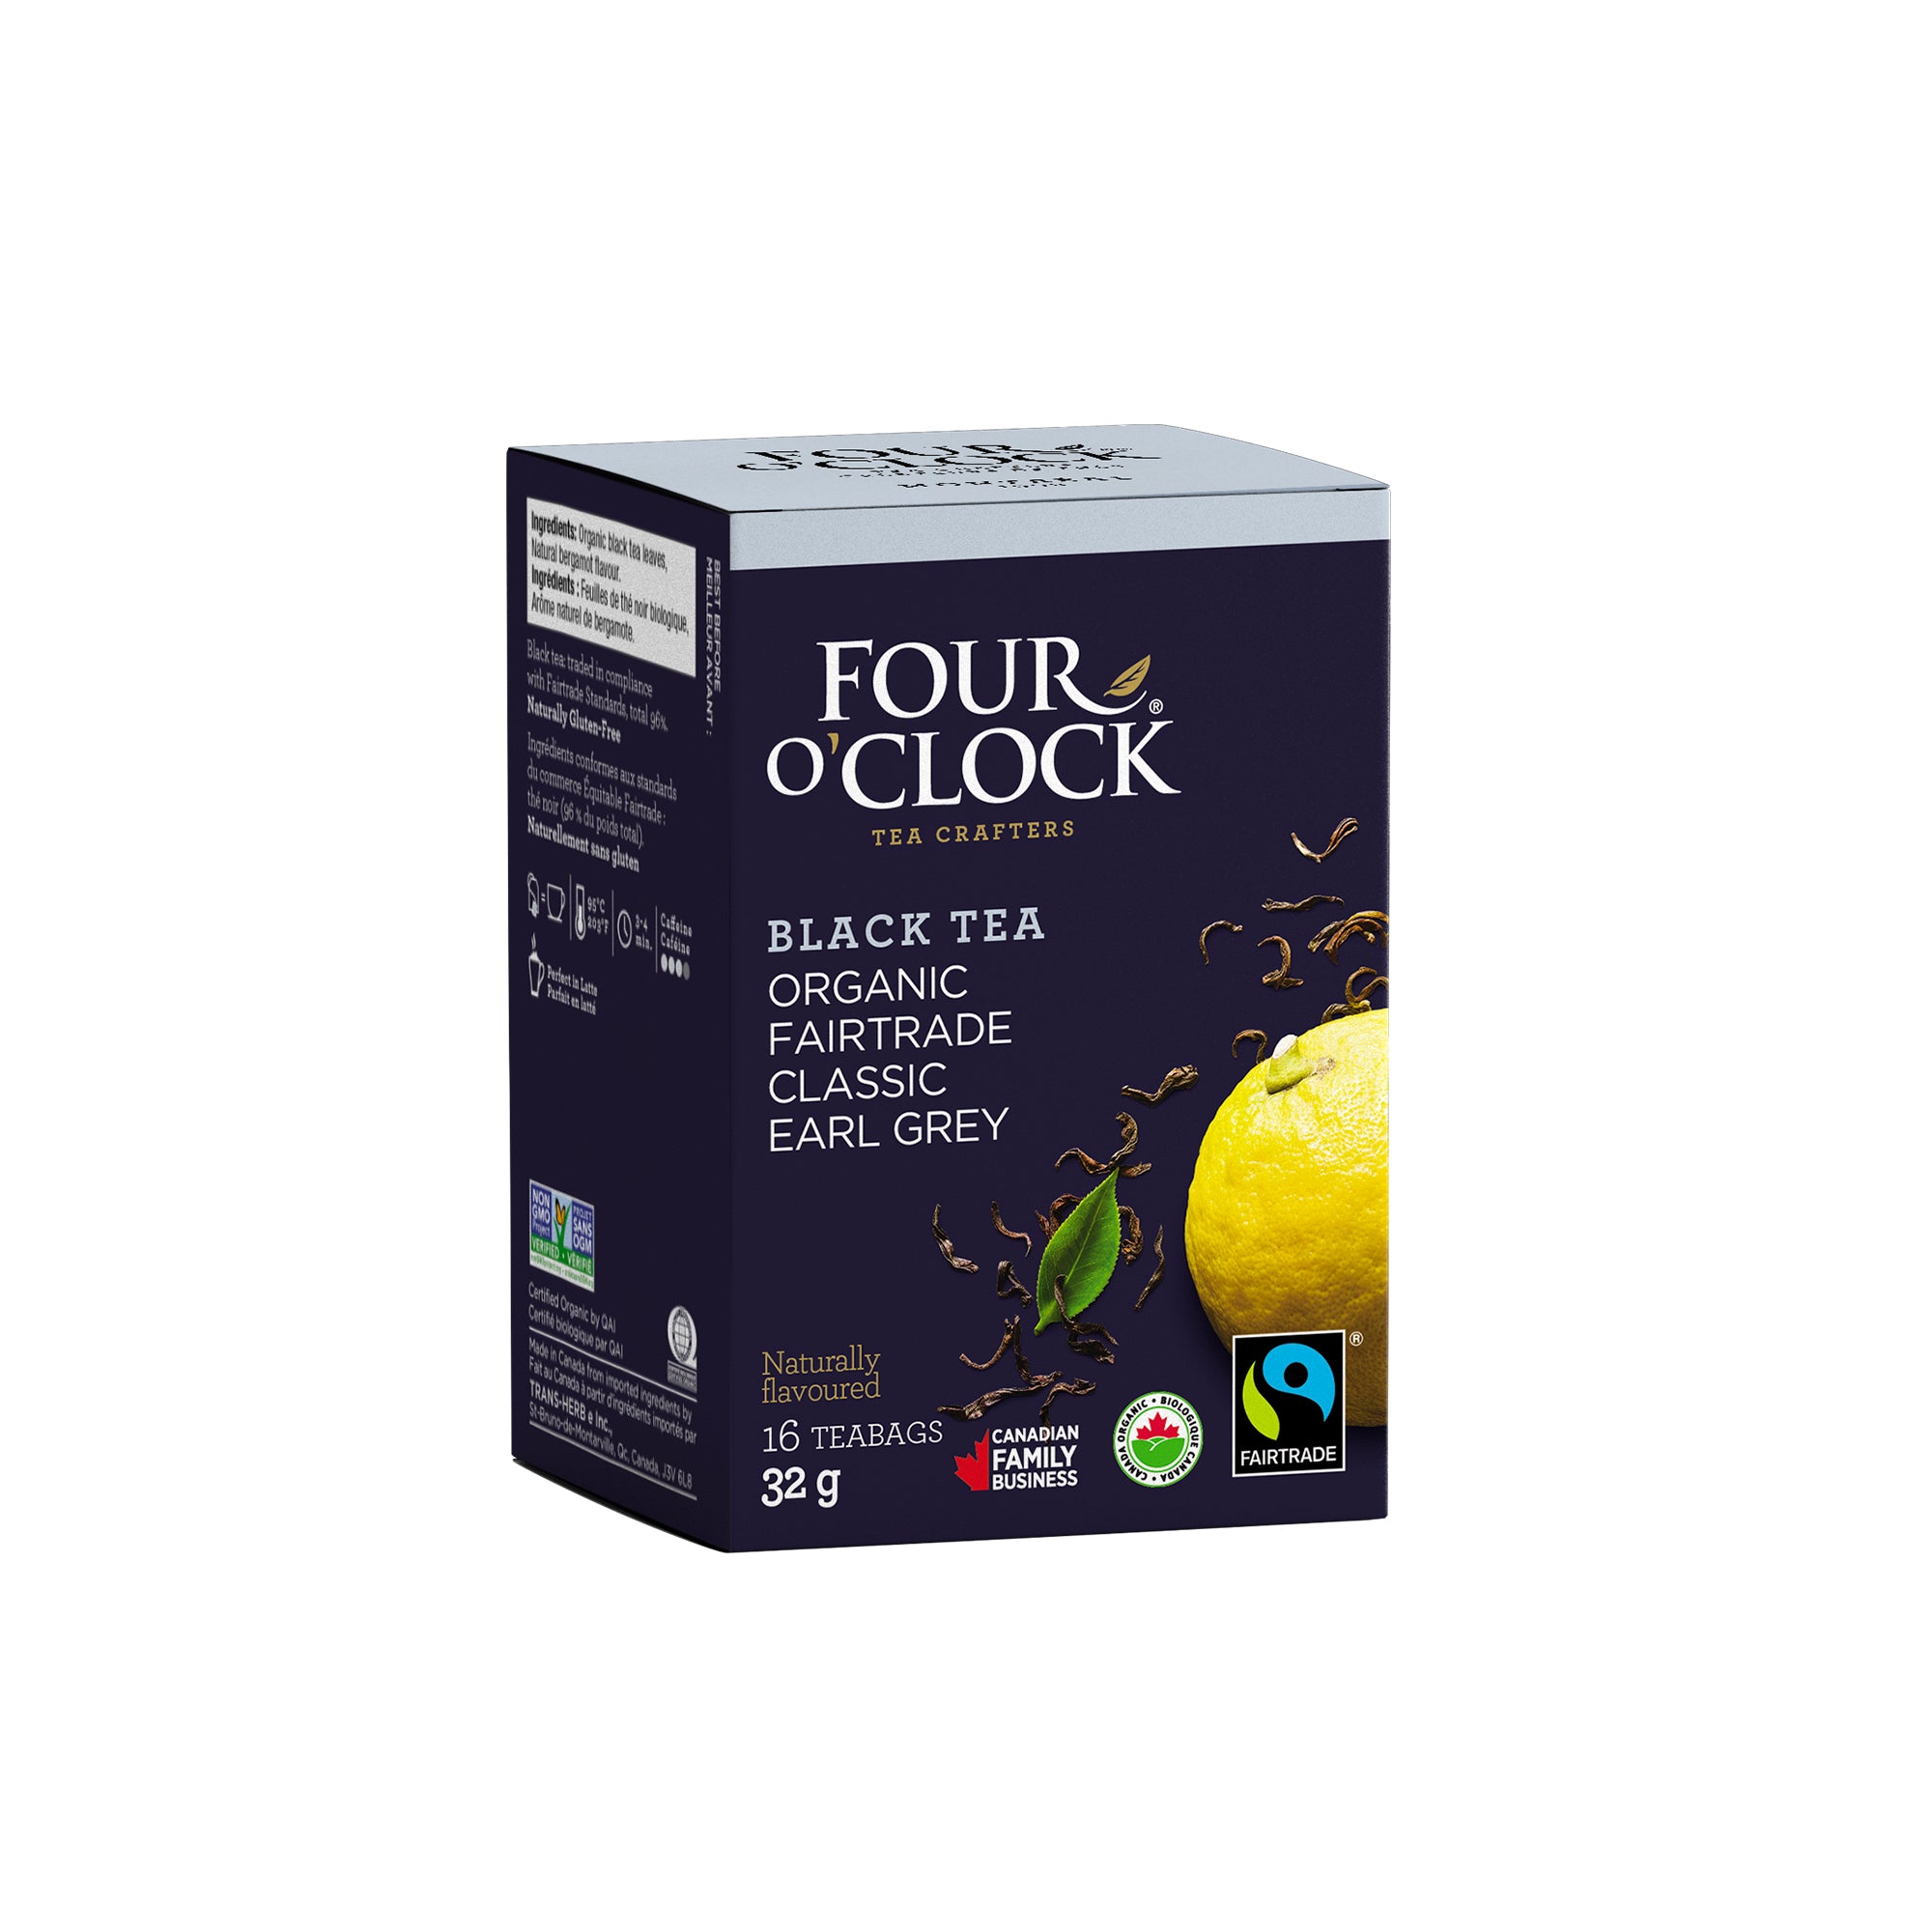 Classic Earl Grey Organic Fairtrade Black Tea